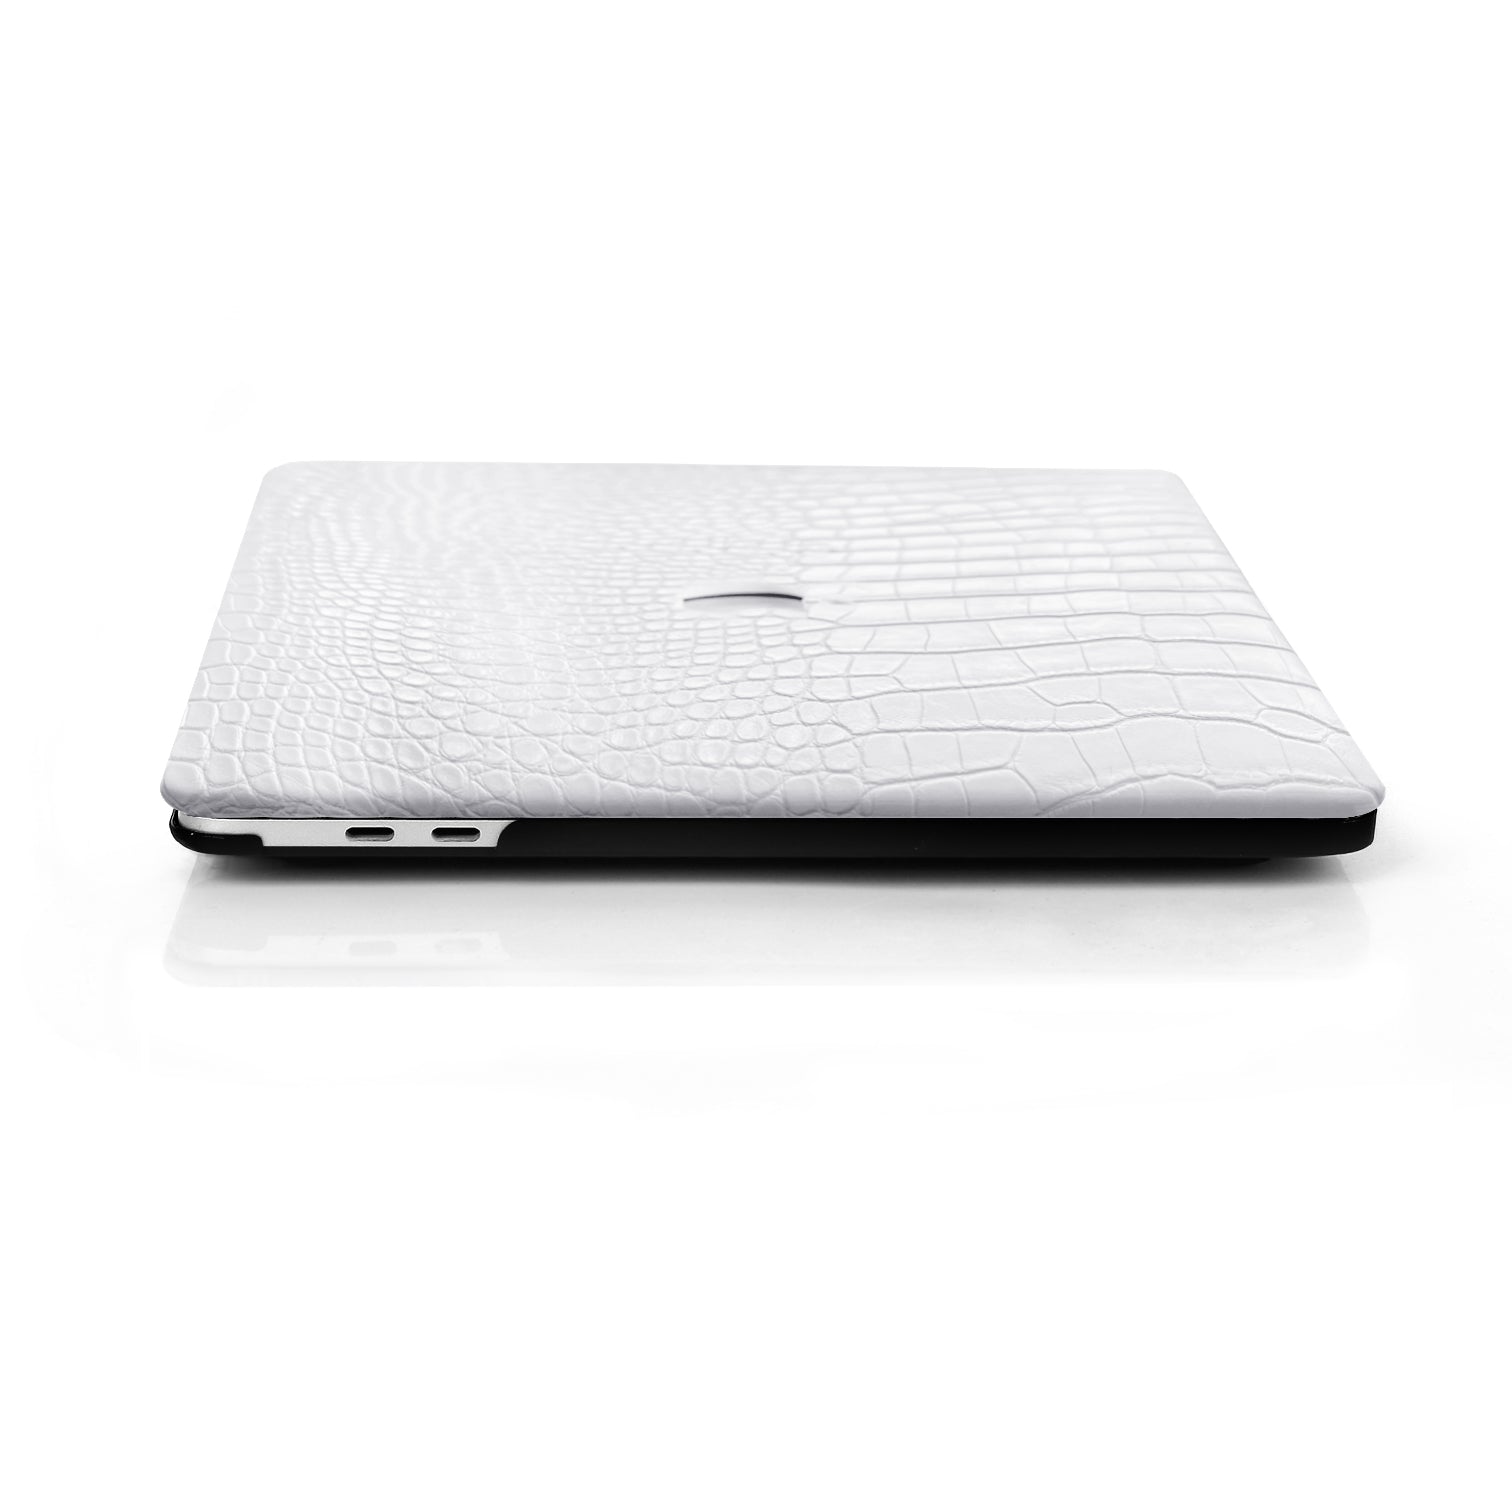 Imitat-Krokodil-weiße MacBook-Hülle